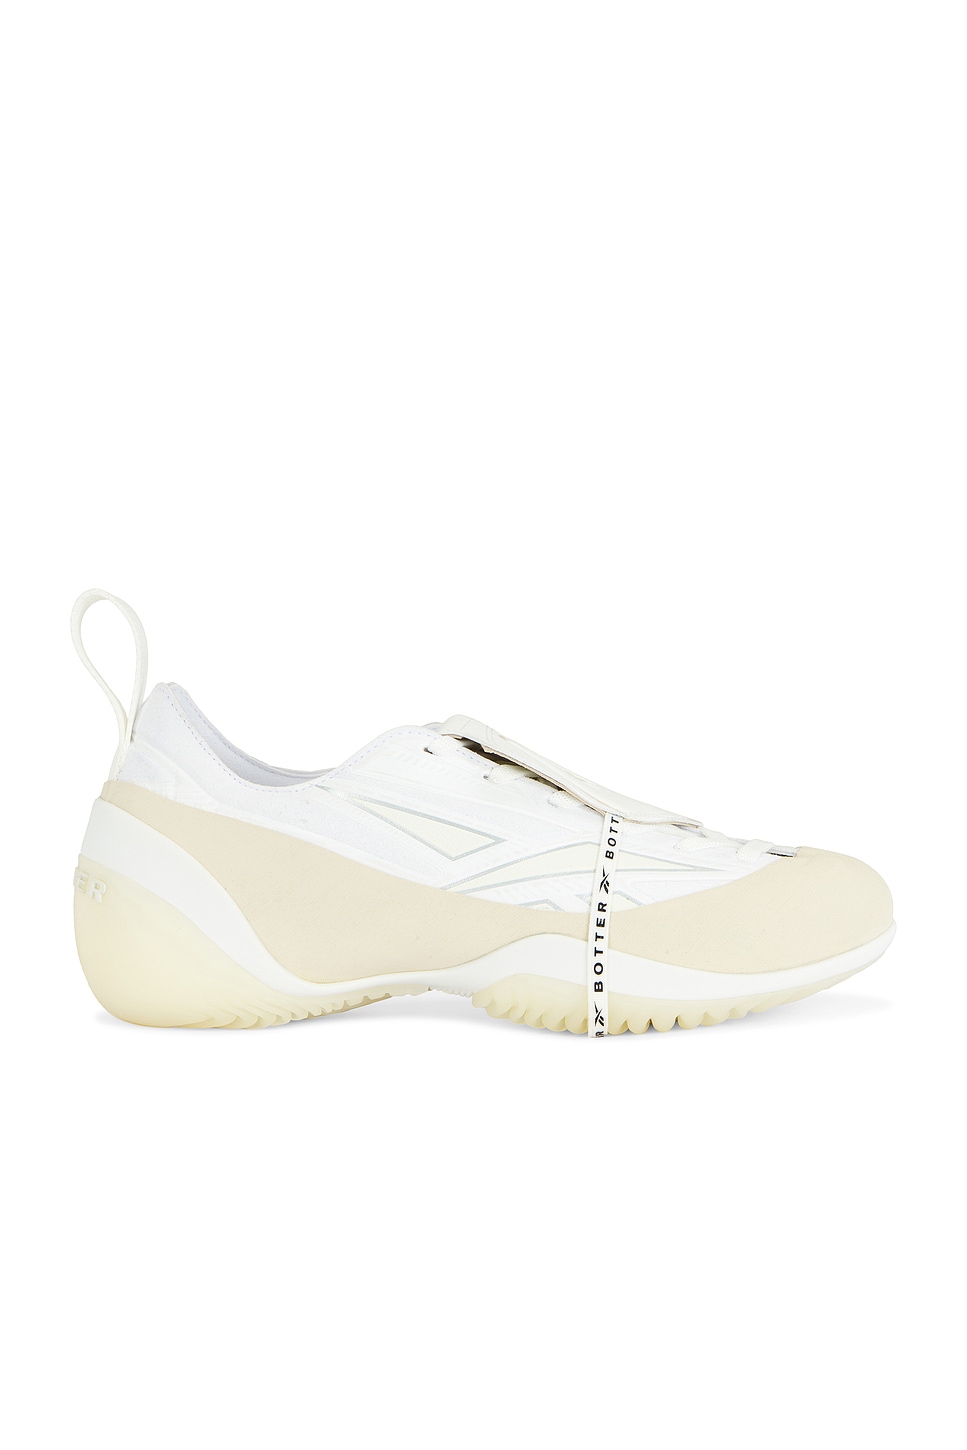 Image 1 of BOTTER x Reebok Sneakers in White & Beige